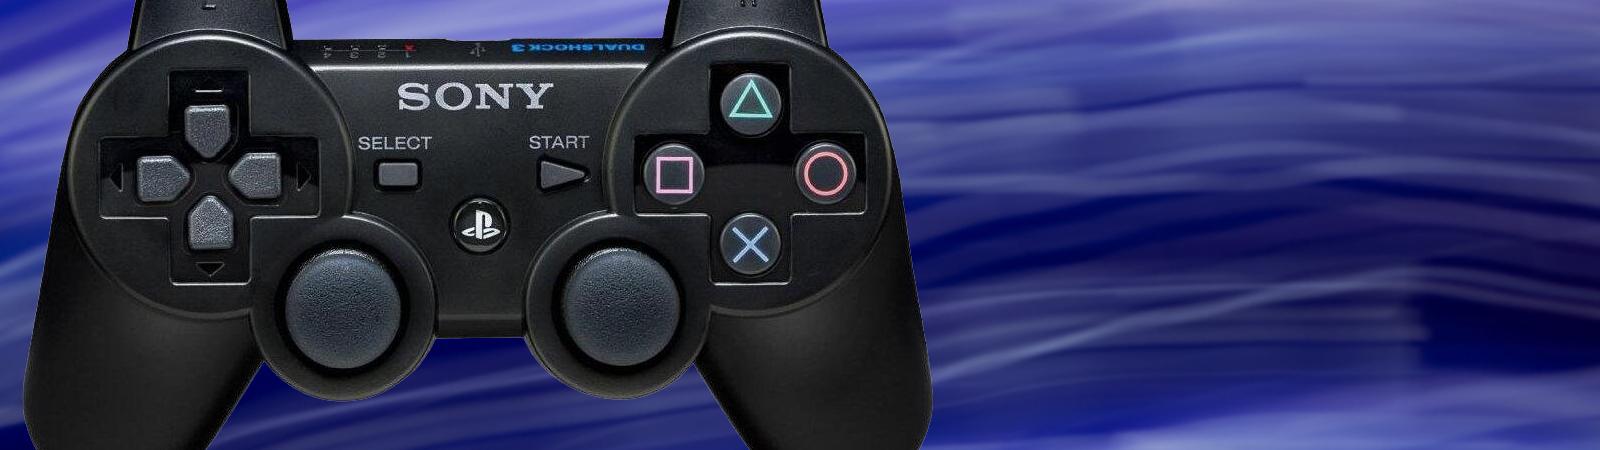 PS3 consoles, PlayStation games & accessoires kopen bij GooHoo!